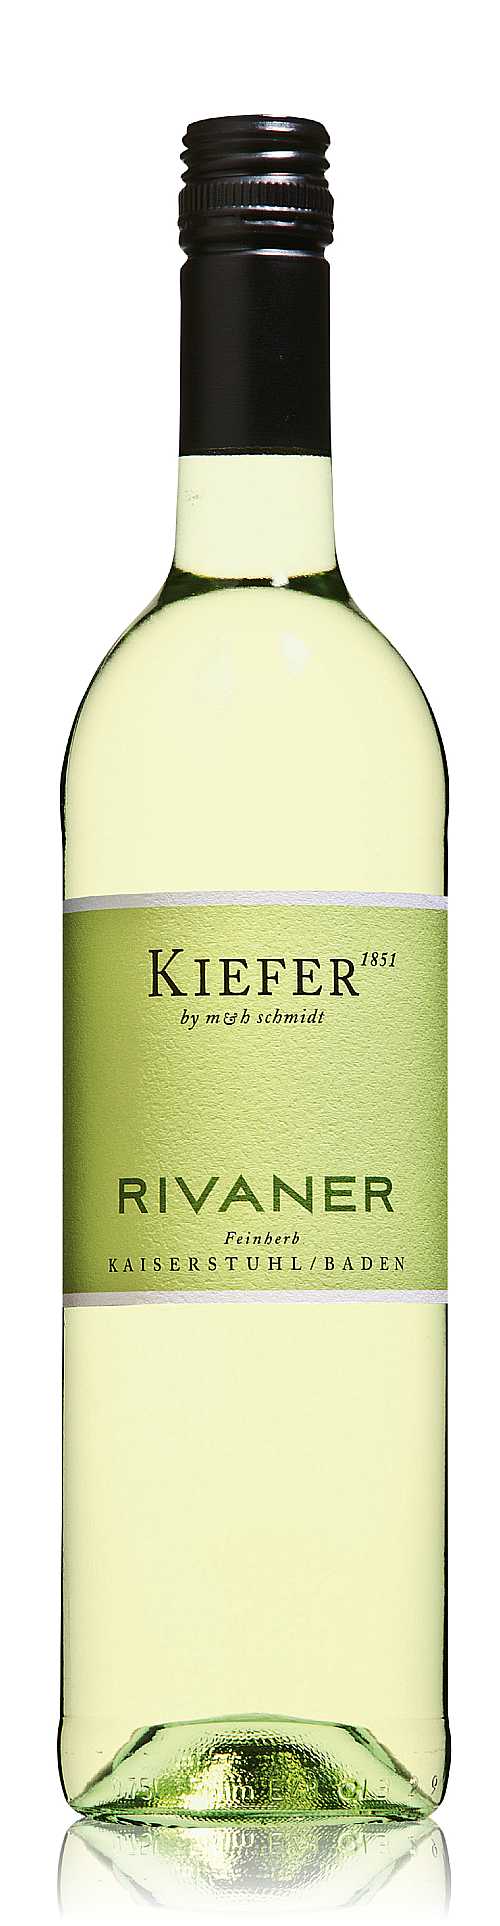 RIVANER FEINHERB Weingut Kiefer Eichstetten am Kaiserstuhl